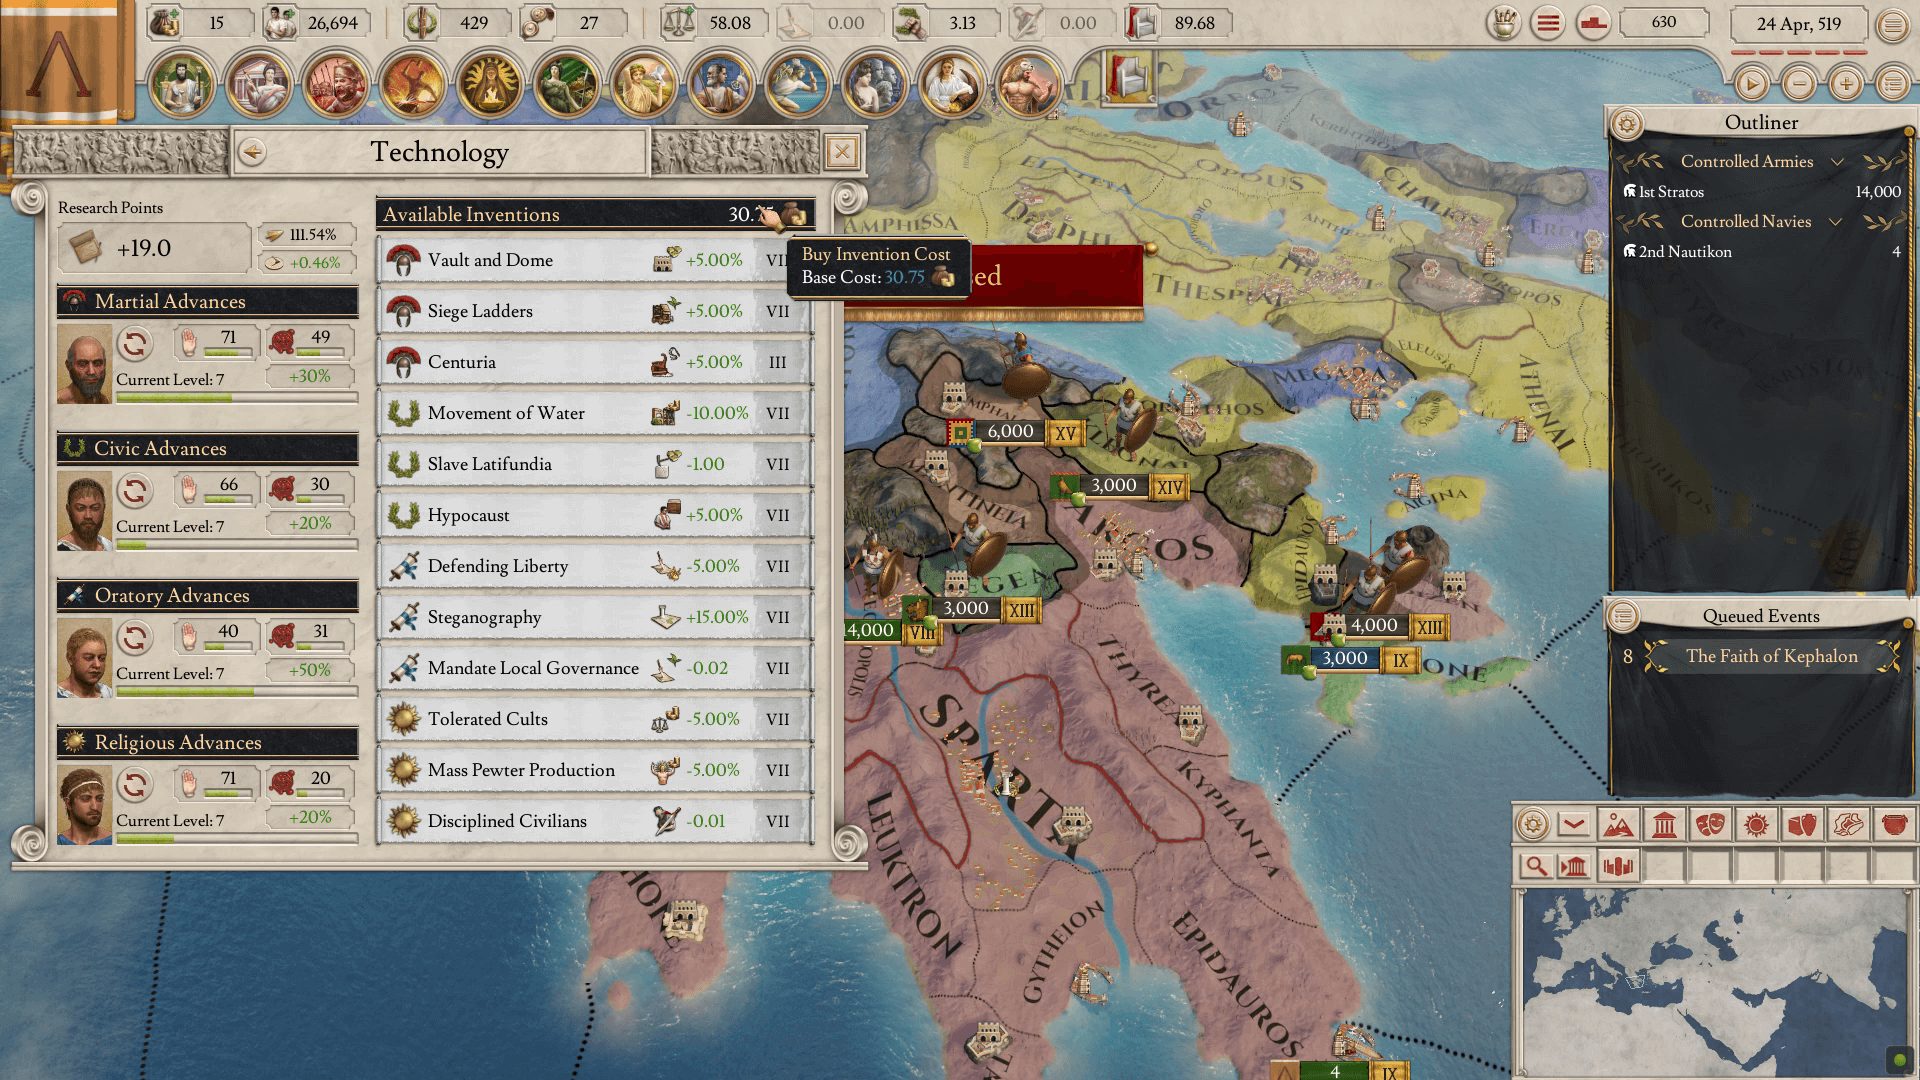 imperator rome engineers